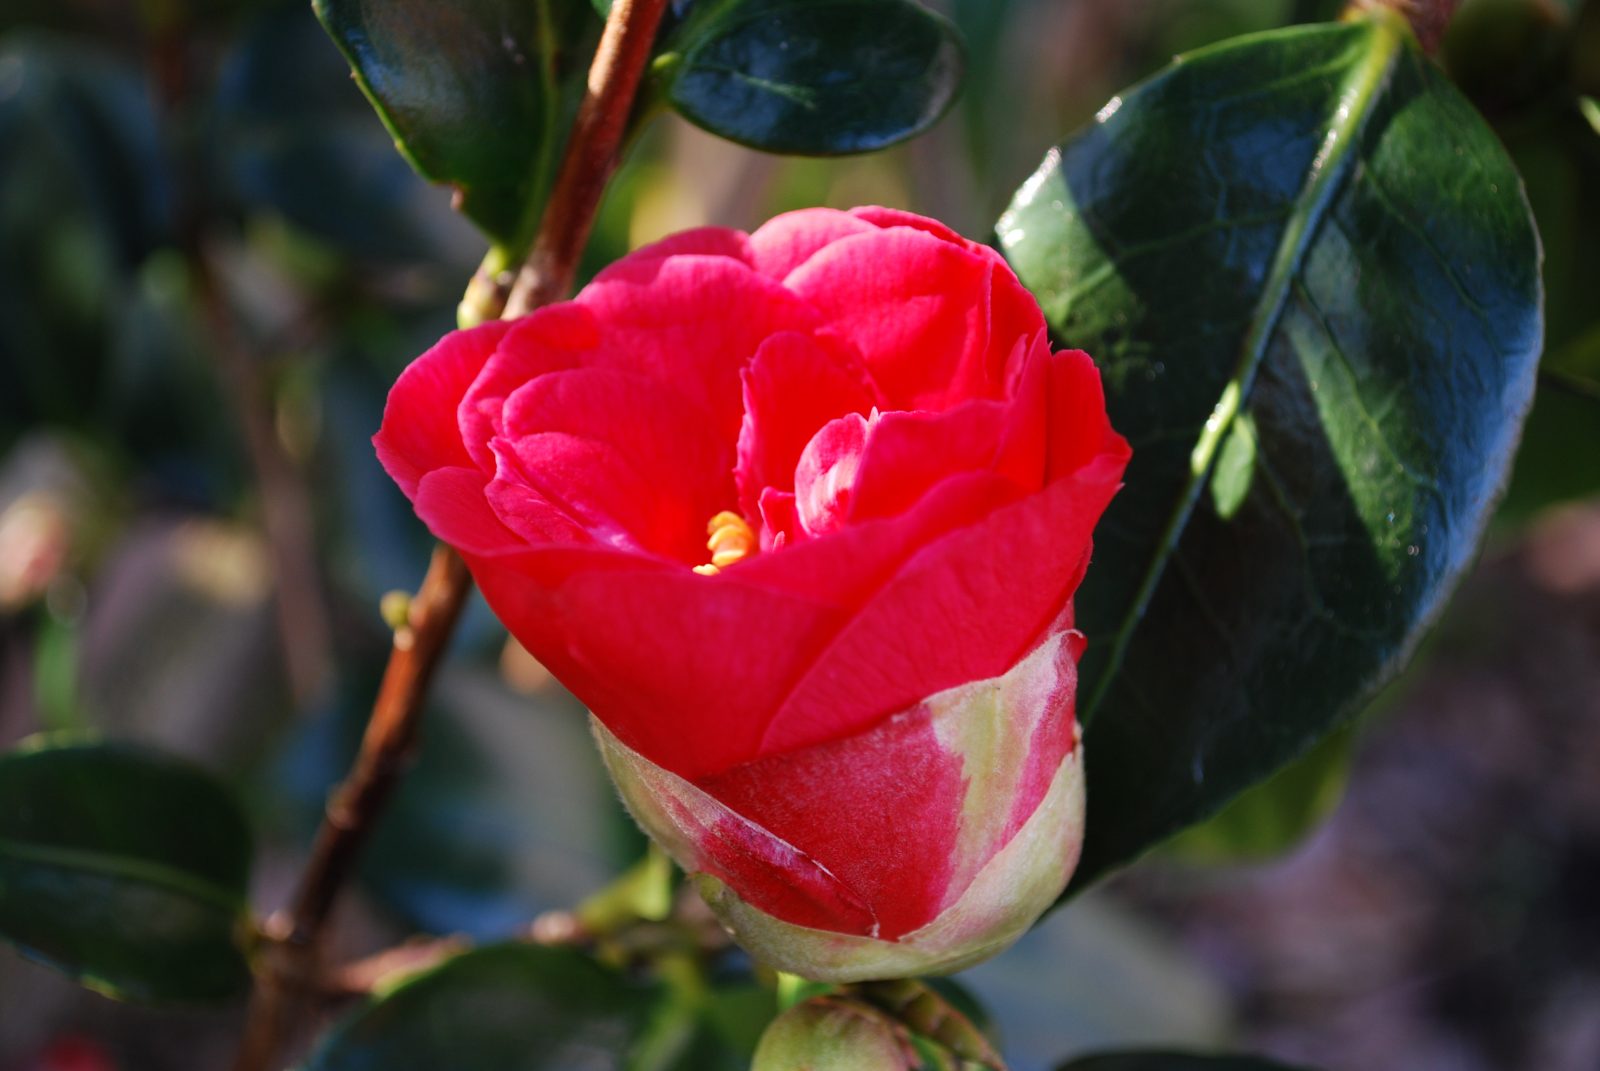 Camellia Adolphe Audusson. Shrubs for Sale. Letsgoplanting.co.uk